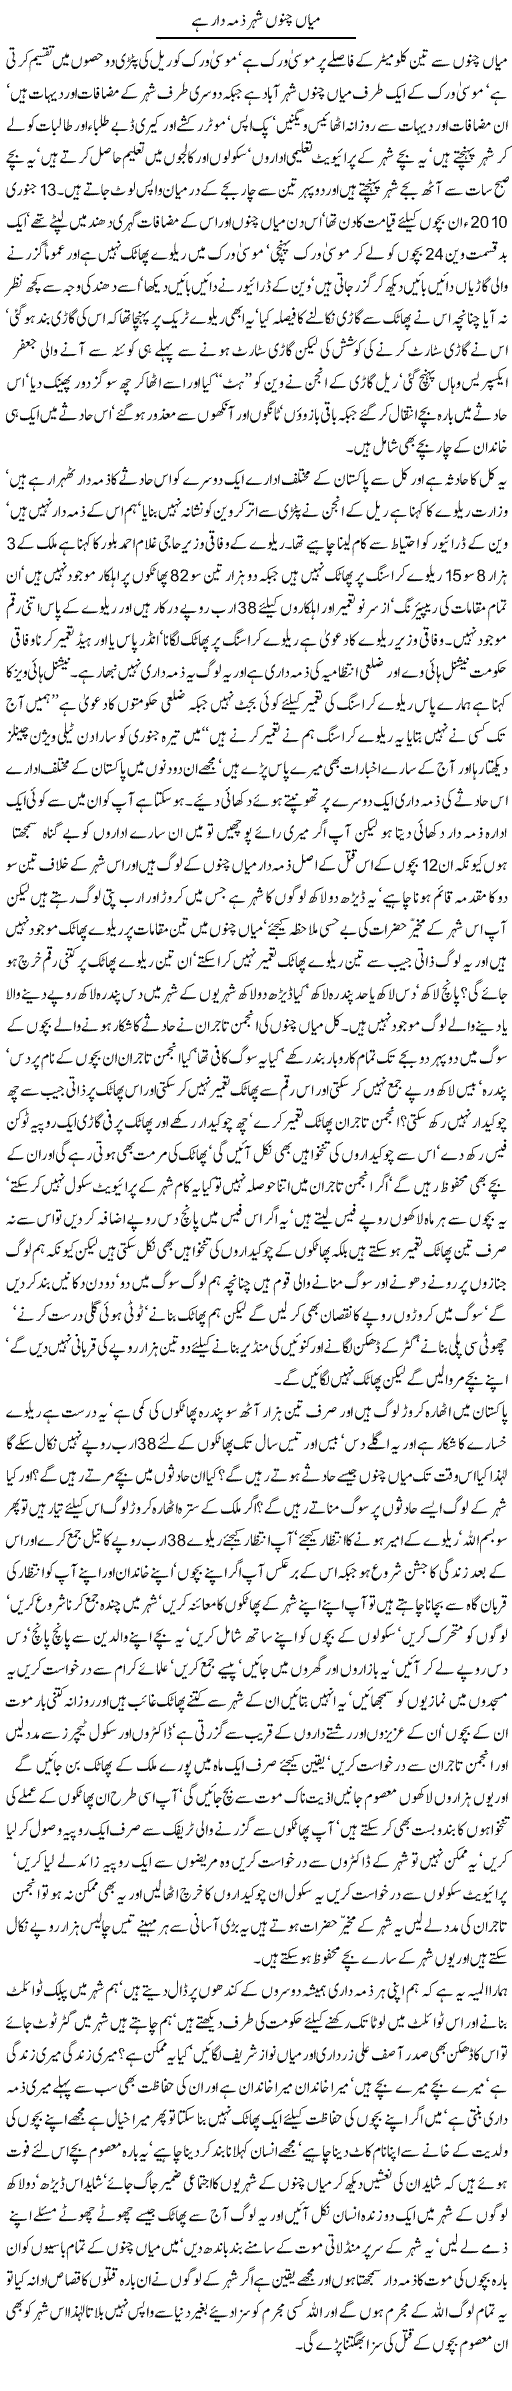 Mian Chanu zimy dar hai - Express column Javed Chaudhary 15 jan 2010